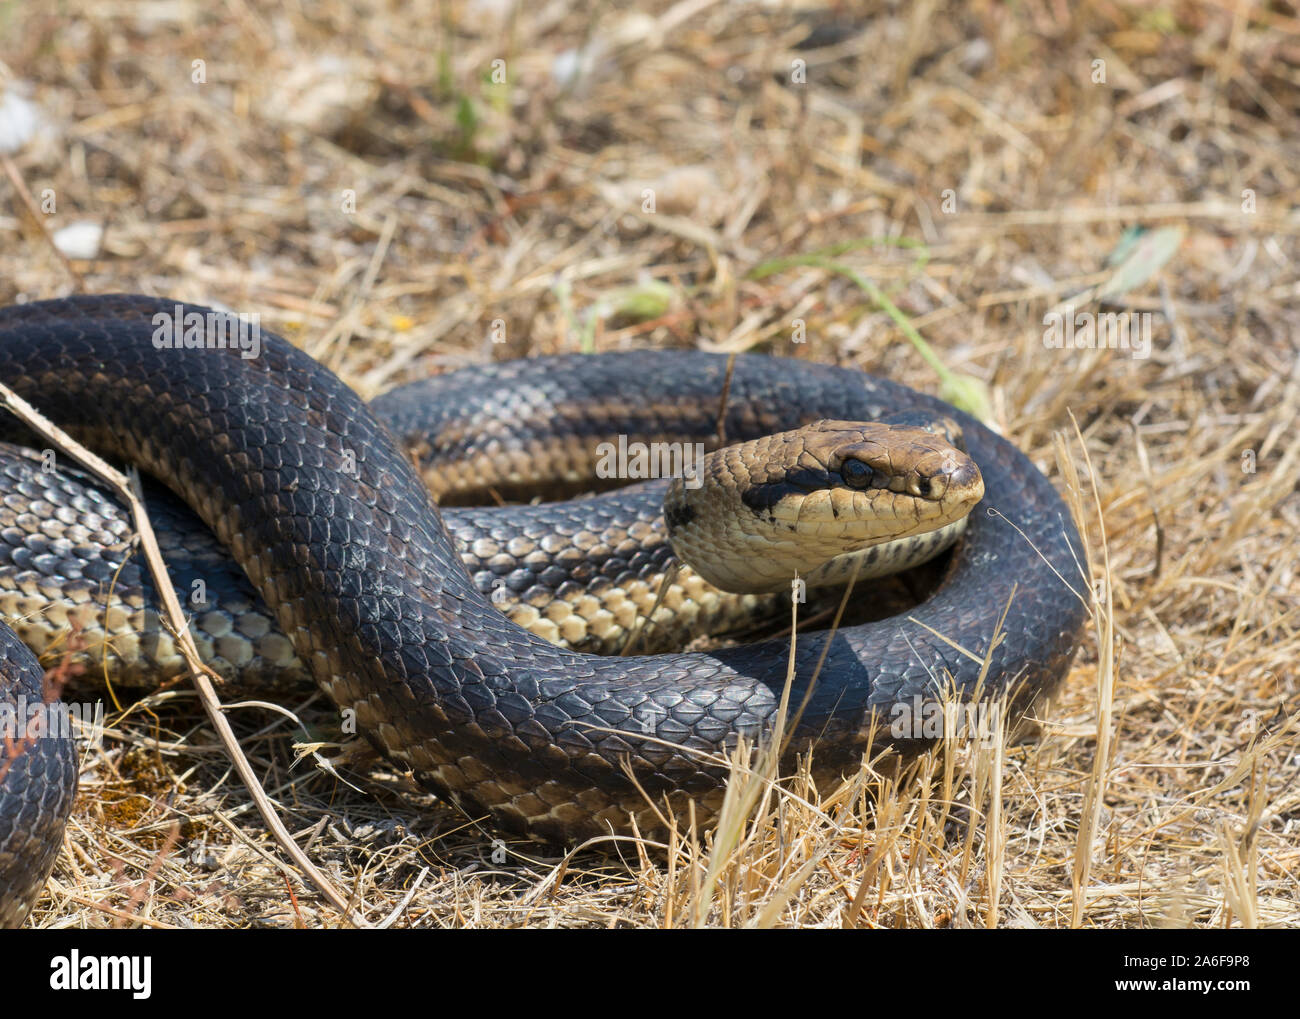 Large very dark Four-lined Snake (Elaphe quatuorlineata) on the Island of Ios, Cyclades Islands, Greece. Stock Photo